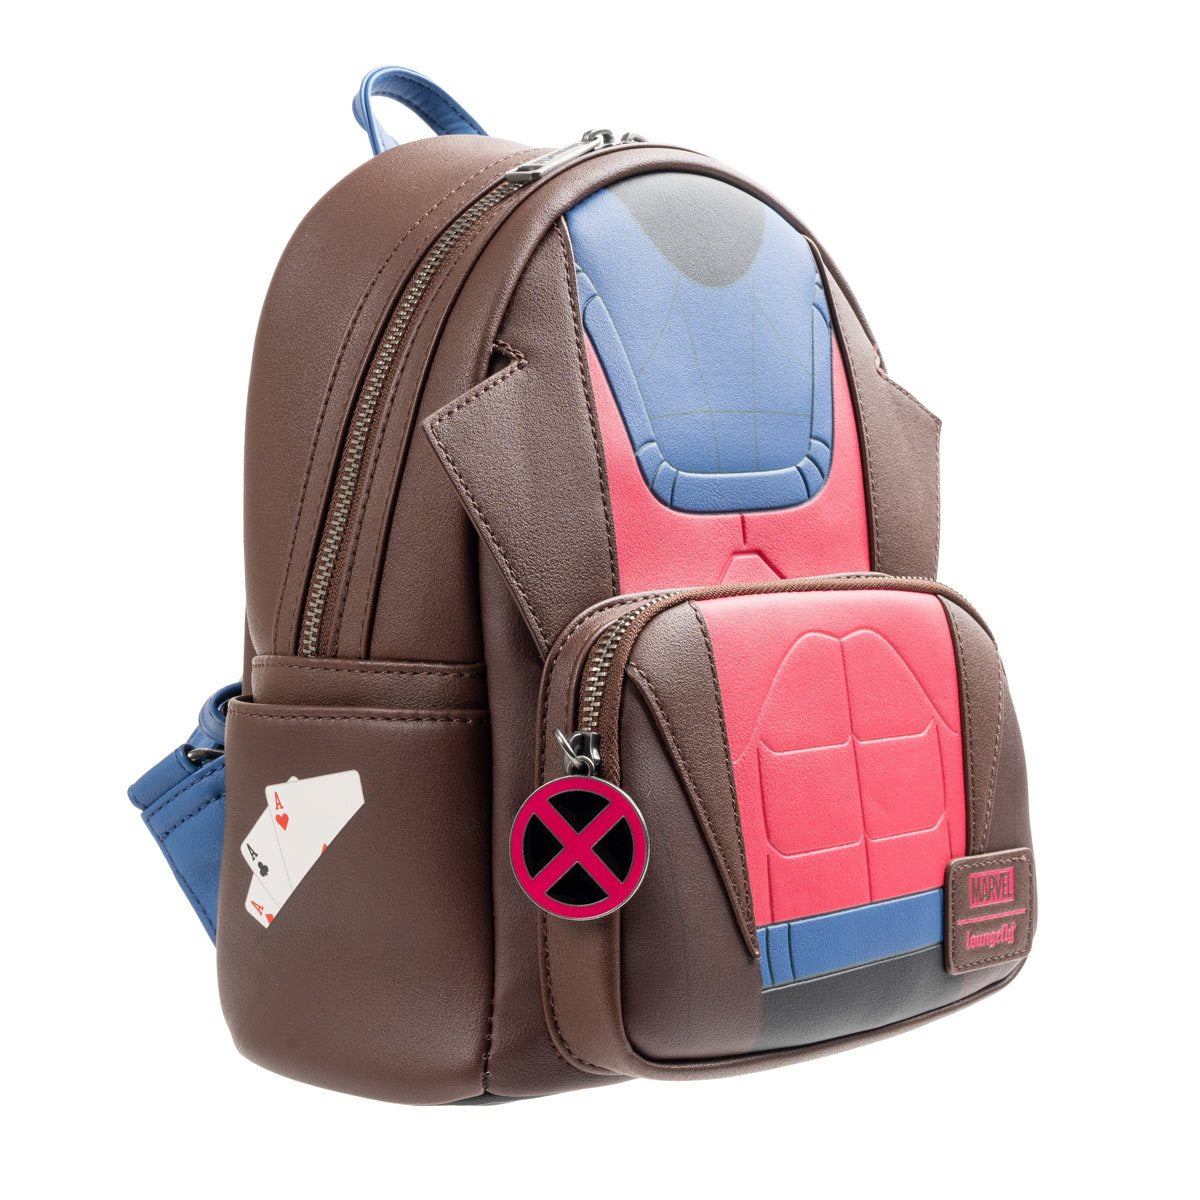 Marvel | X-Men Gambit Cosplay Mini Backpack